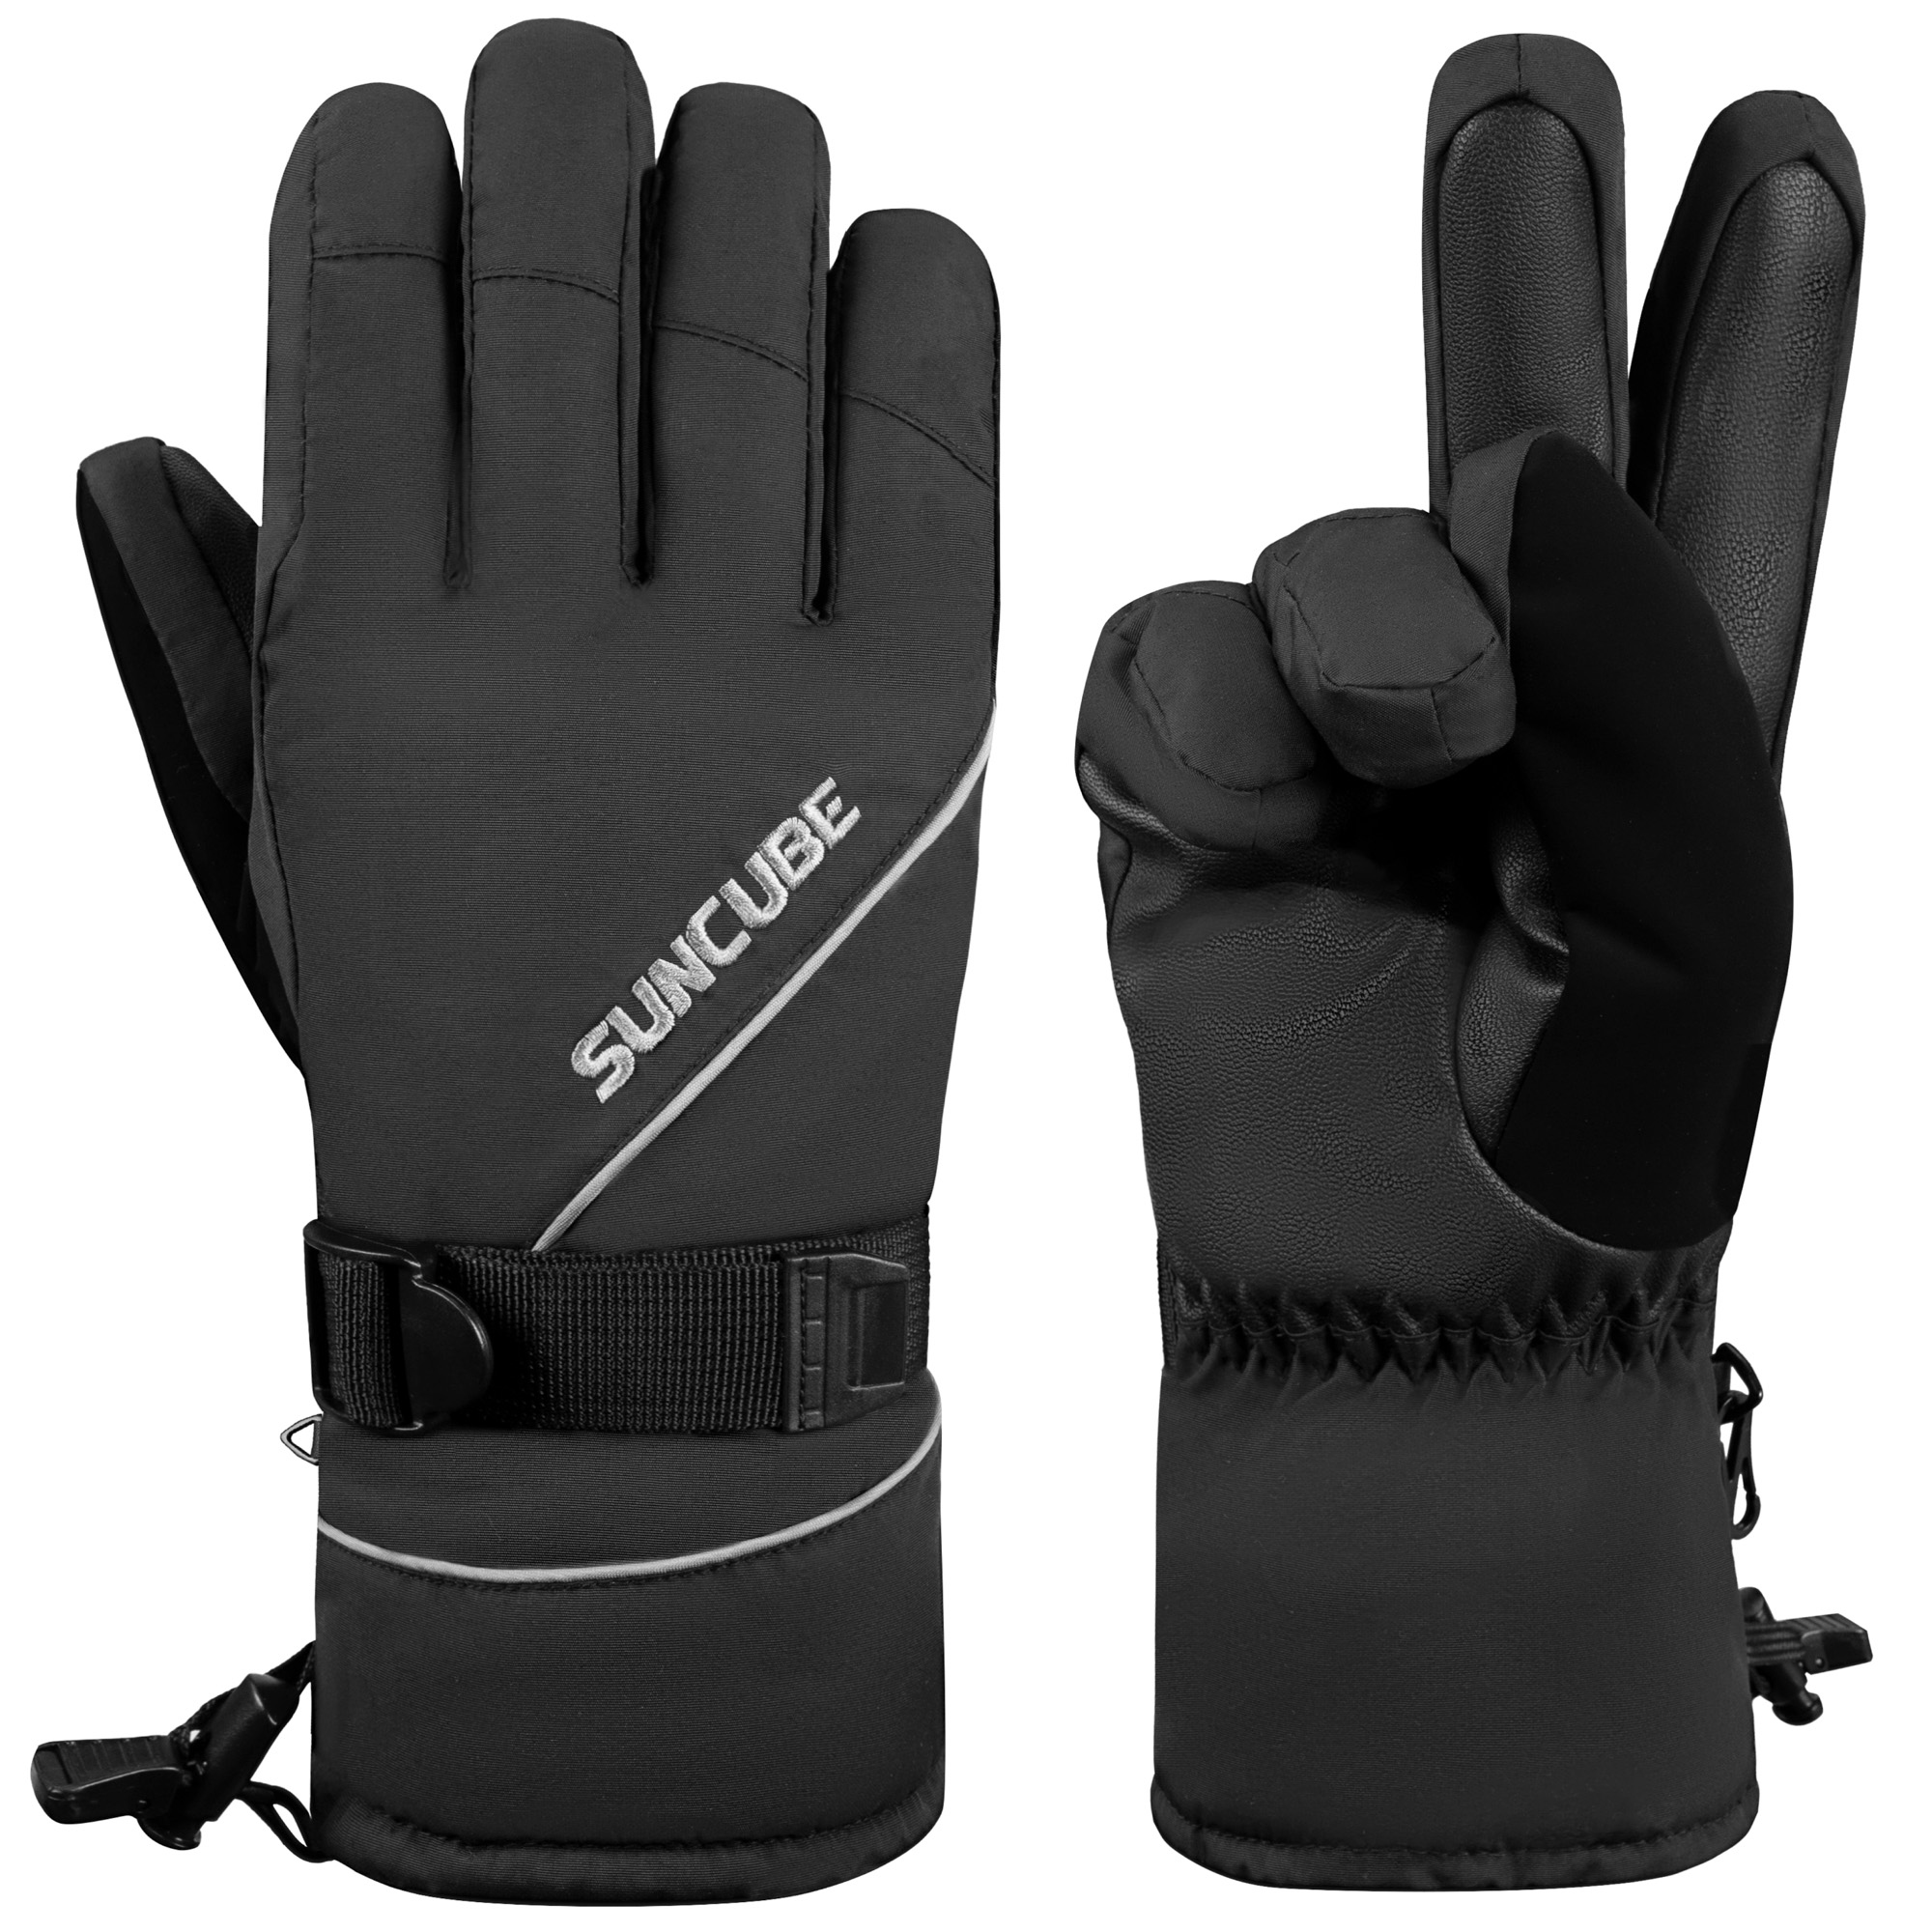 Reebok Running Thermal Gloves Great for Winter size MEDIUM FREE UK POSTAGE 